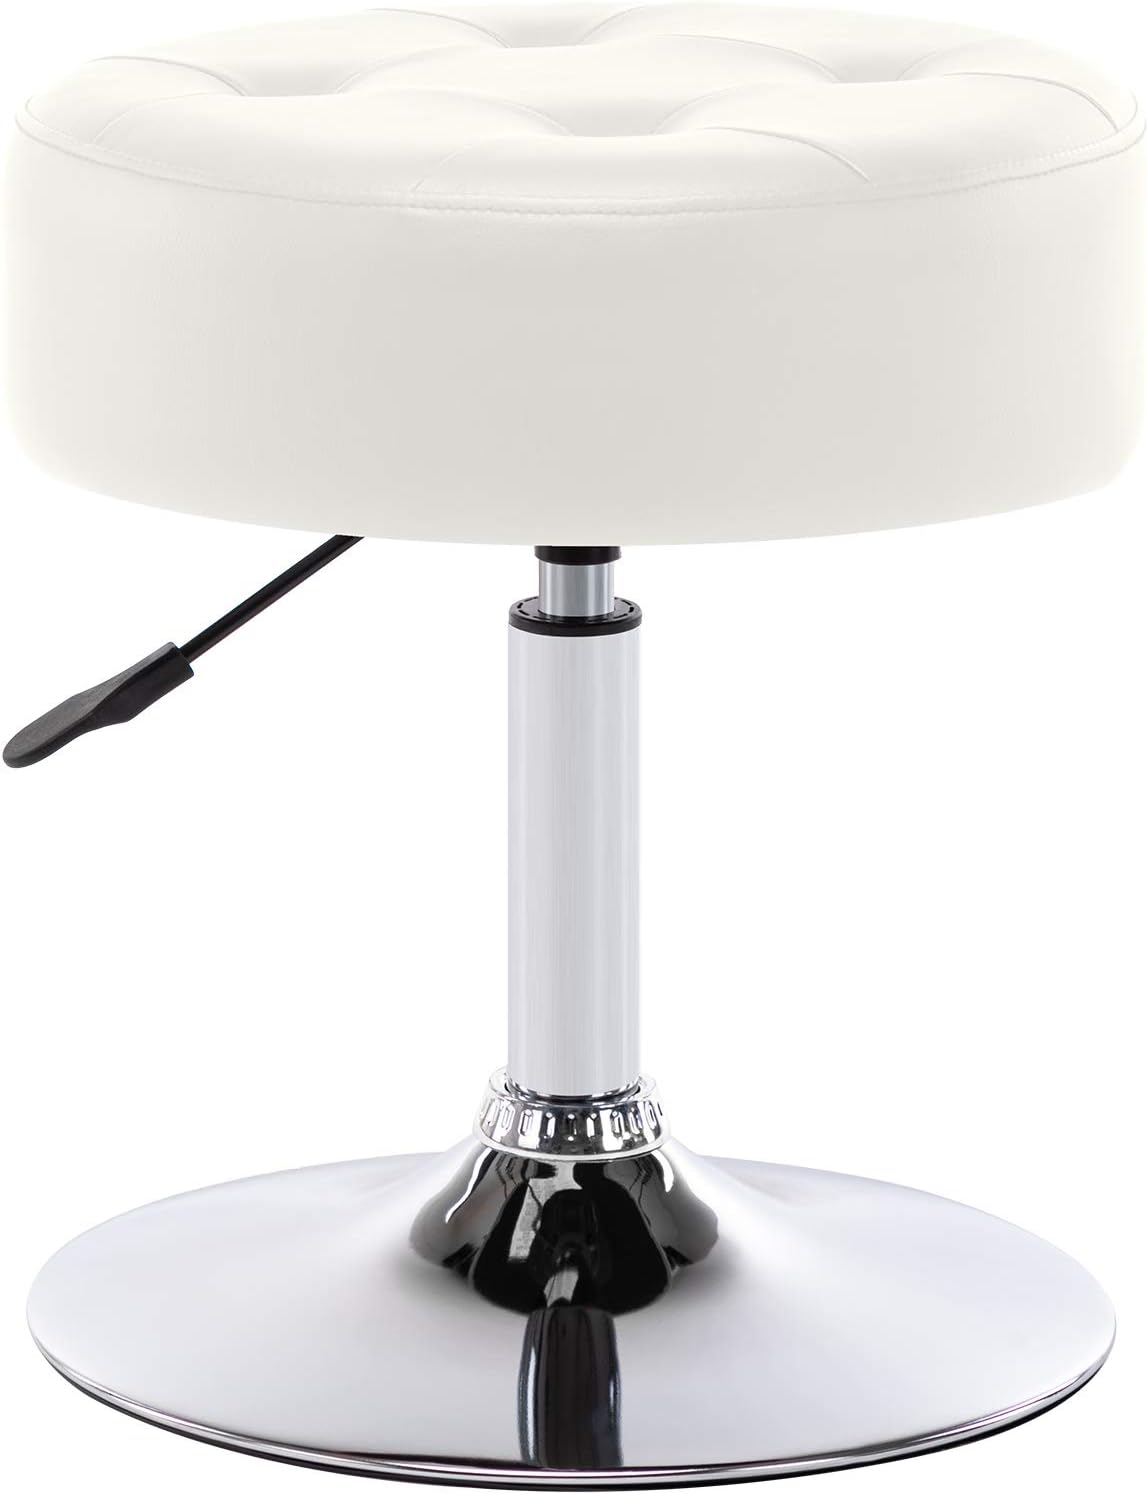 Duhome PU Leather Vanity Stool Makeup Stool Vanity Chair Height Adjustable Swivel Stool Round Ottoman White